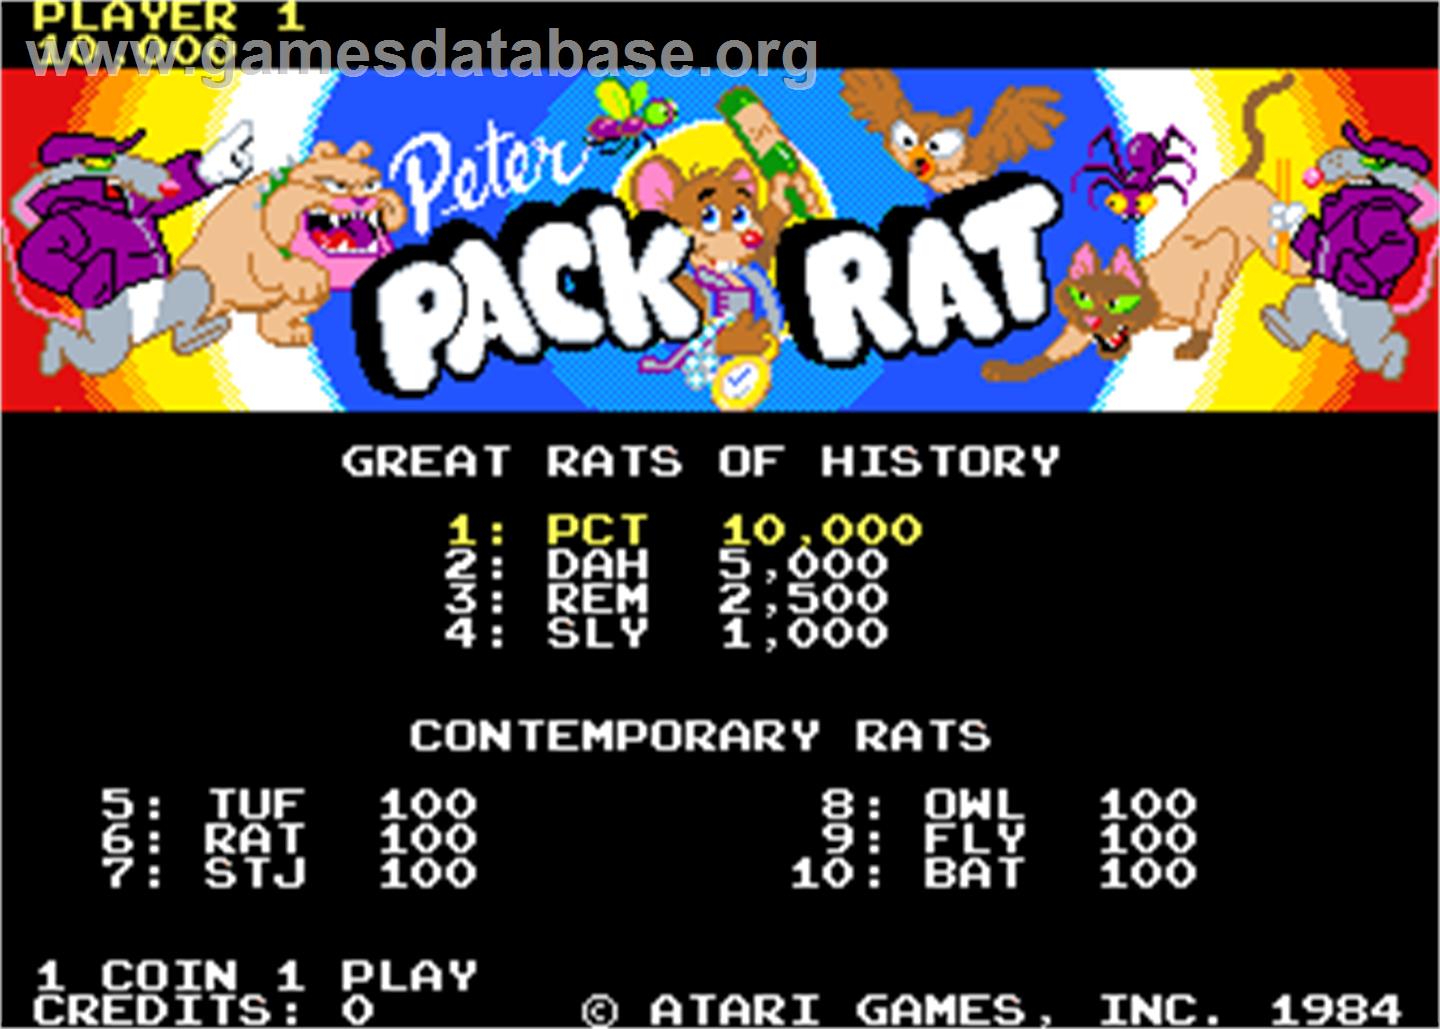 Peter Pack-Rat - Arcade - Artwork - Title Screen